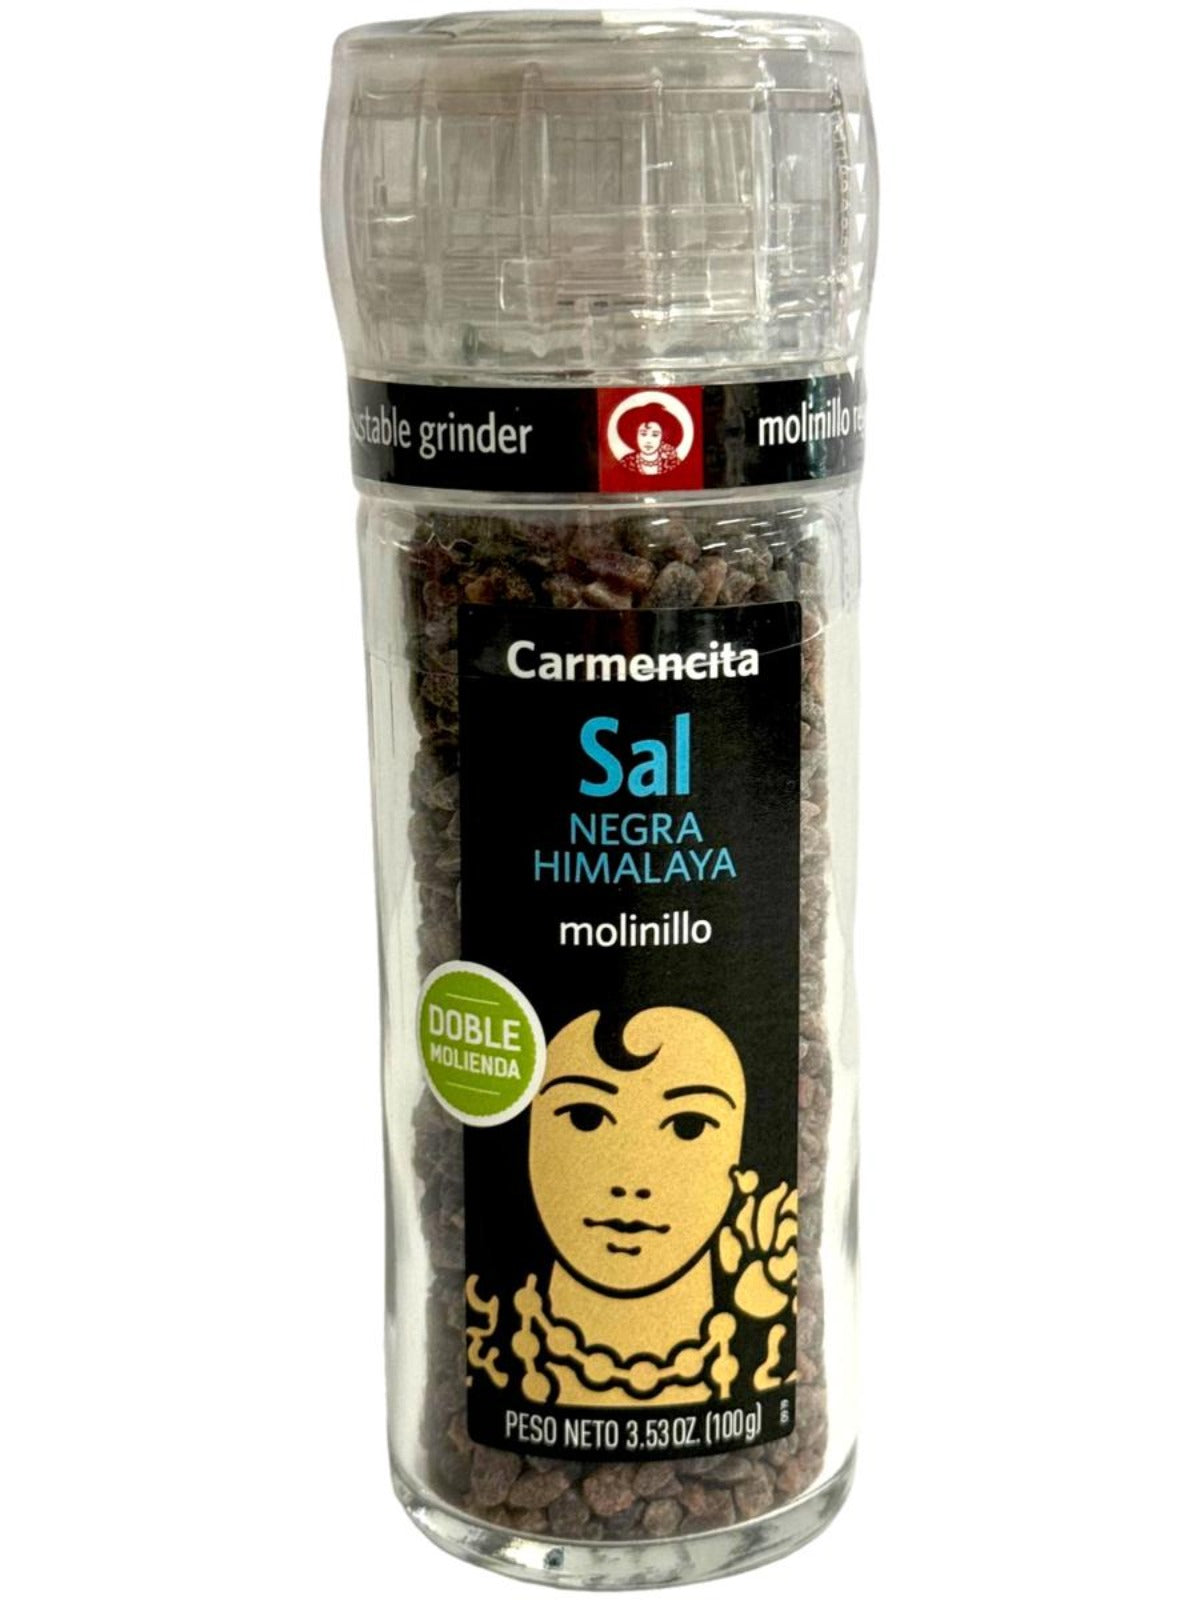 Carmencita Spanish Himalayan Black Salt Grinders 100g -  2 Pack 200g Total